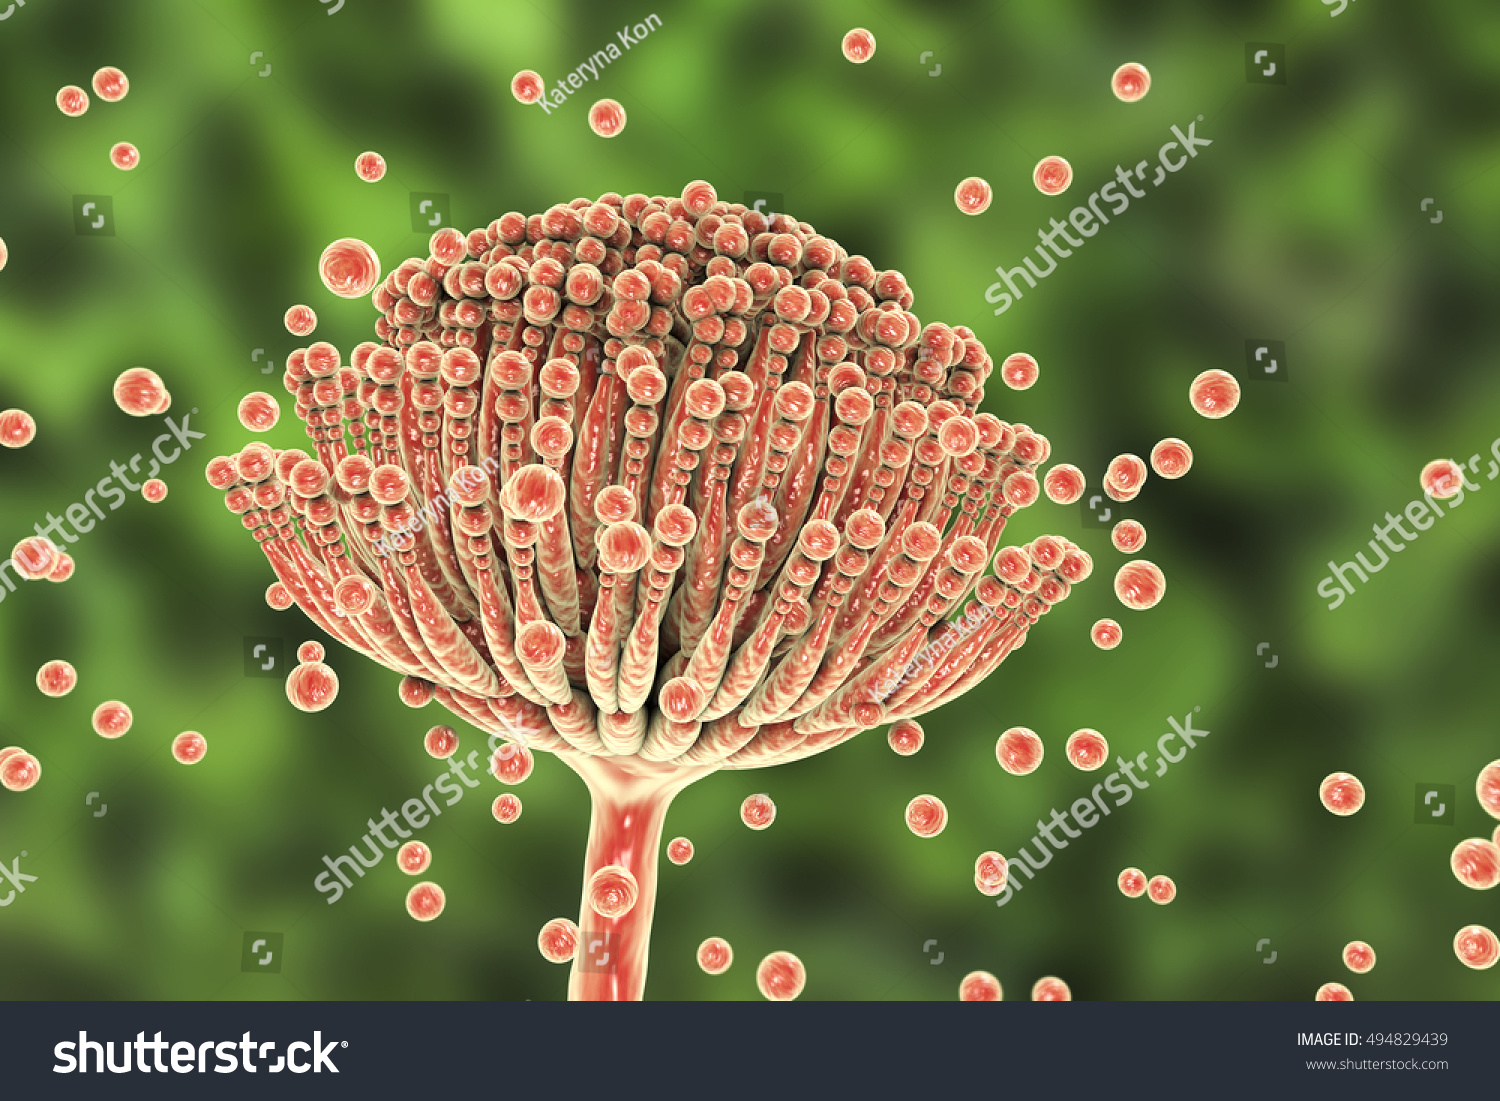 Black Mold Fungi Aspergillus Which Produce Stock Illustration 494829439